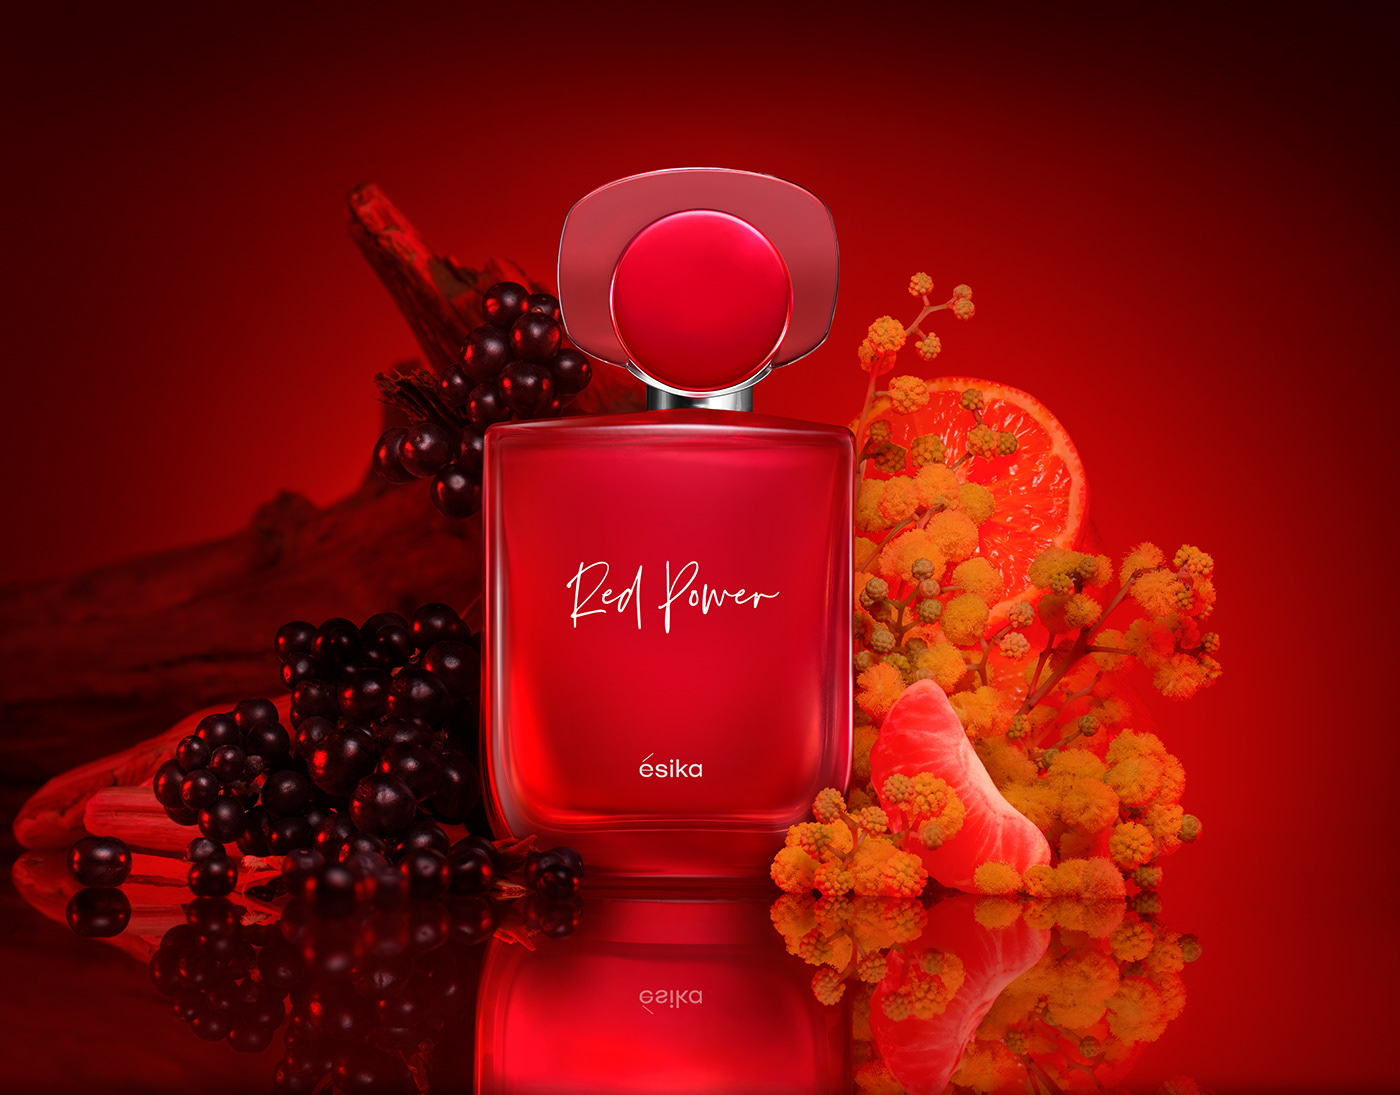 beauty empowerment female feminism Fragrance perfume power red strength women